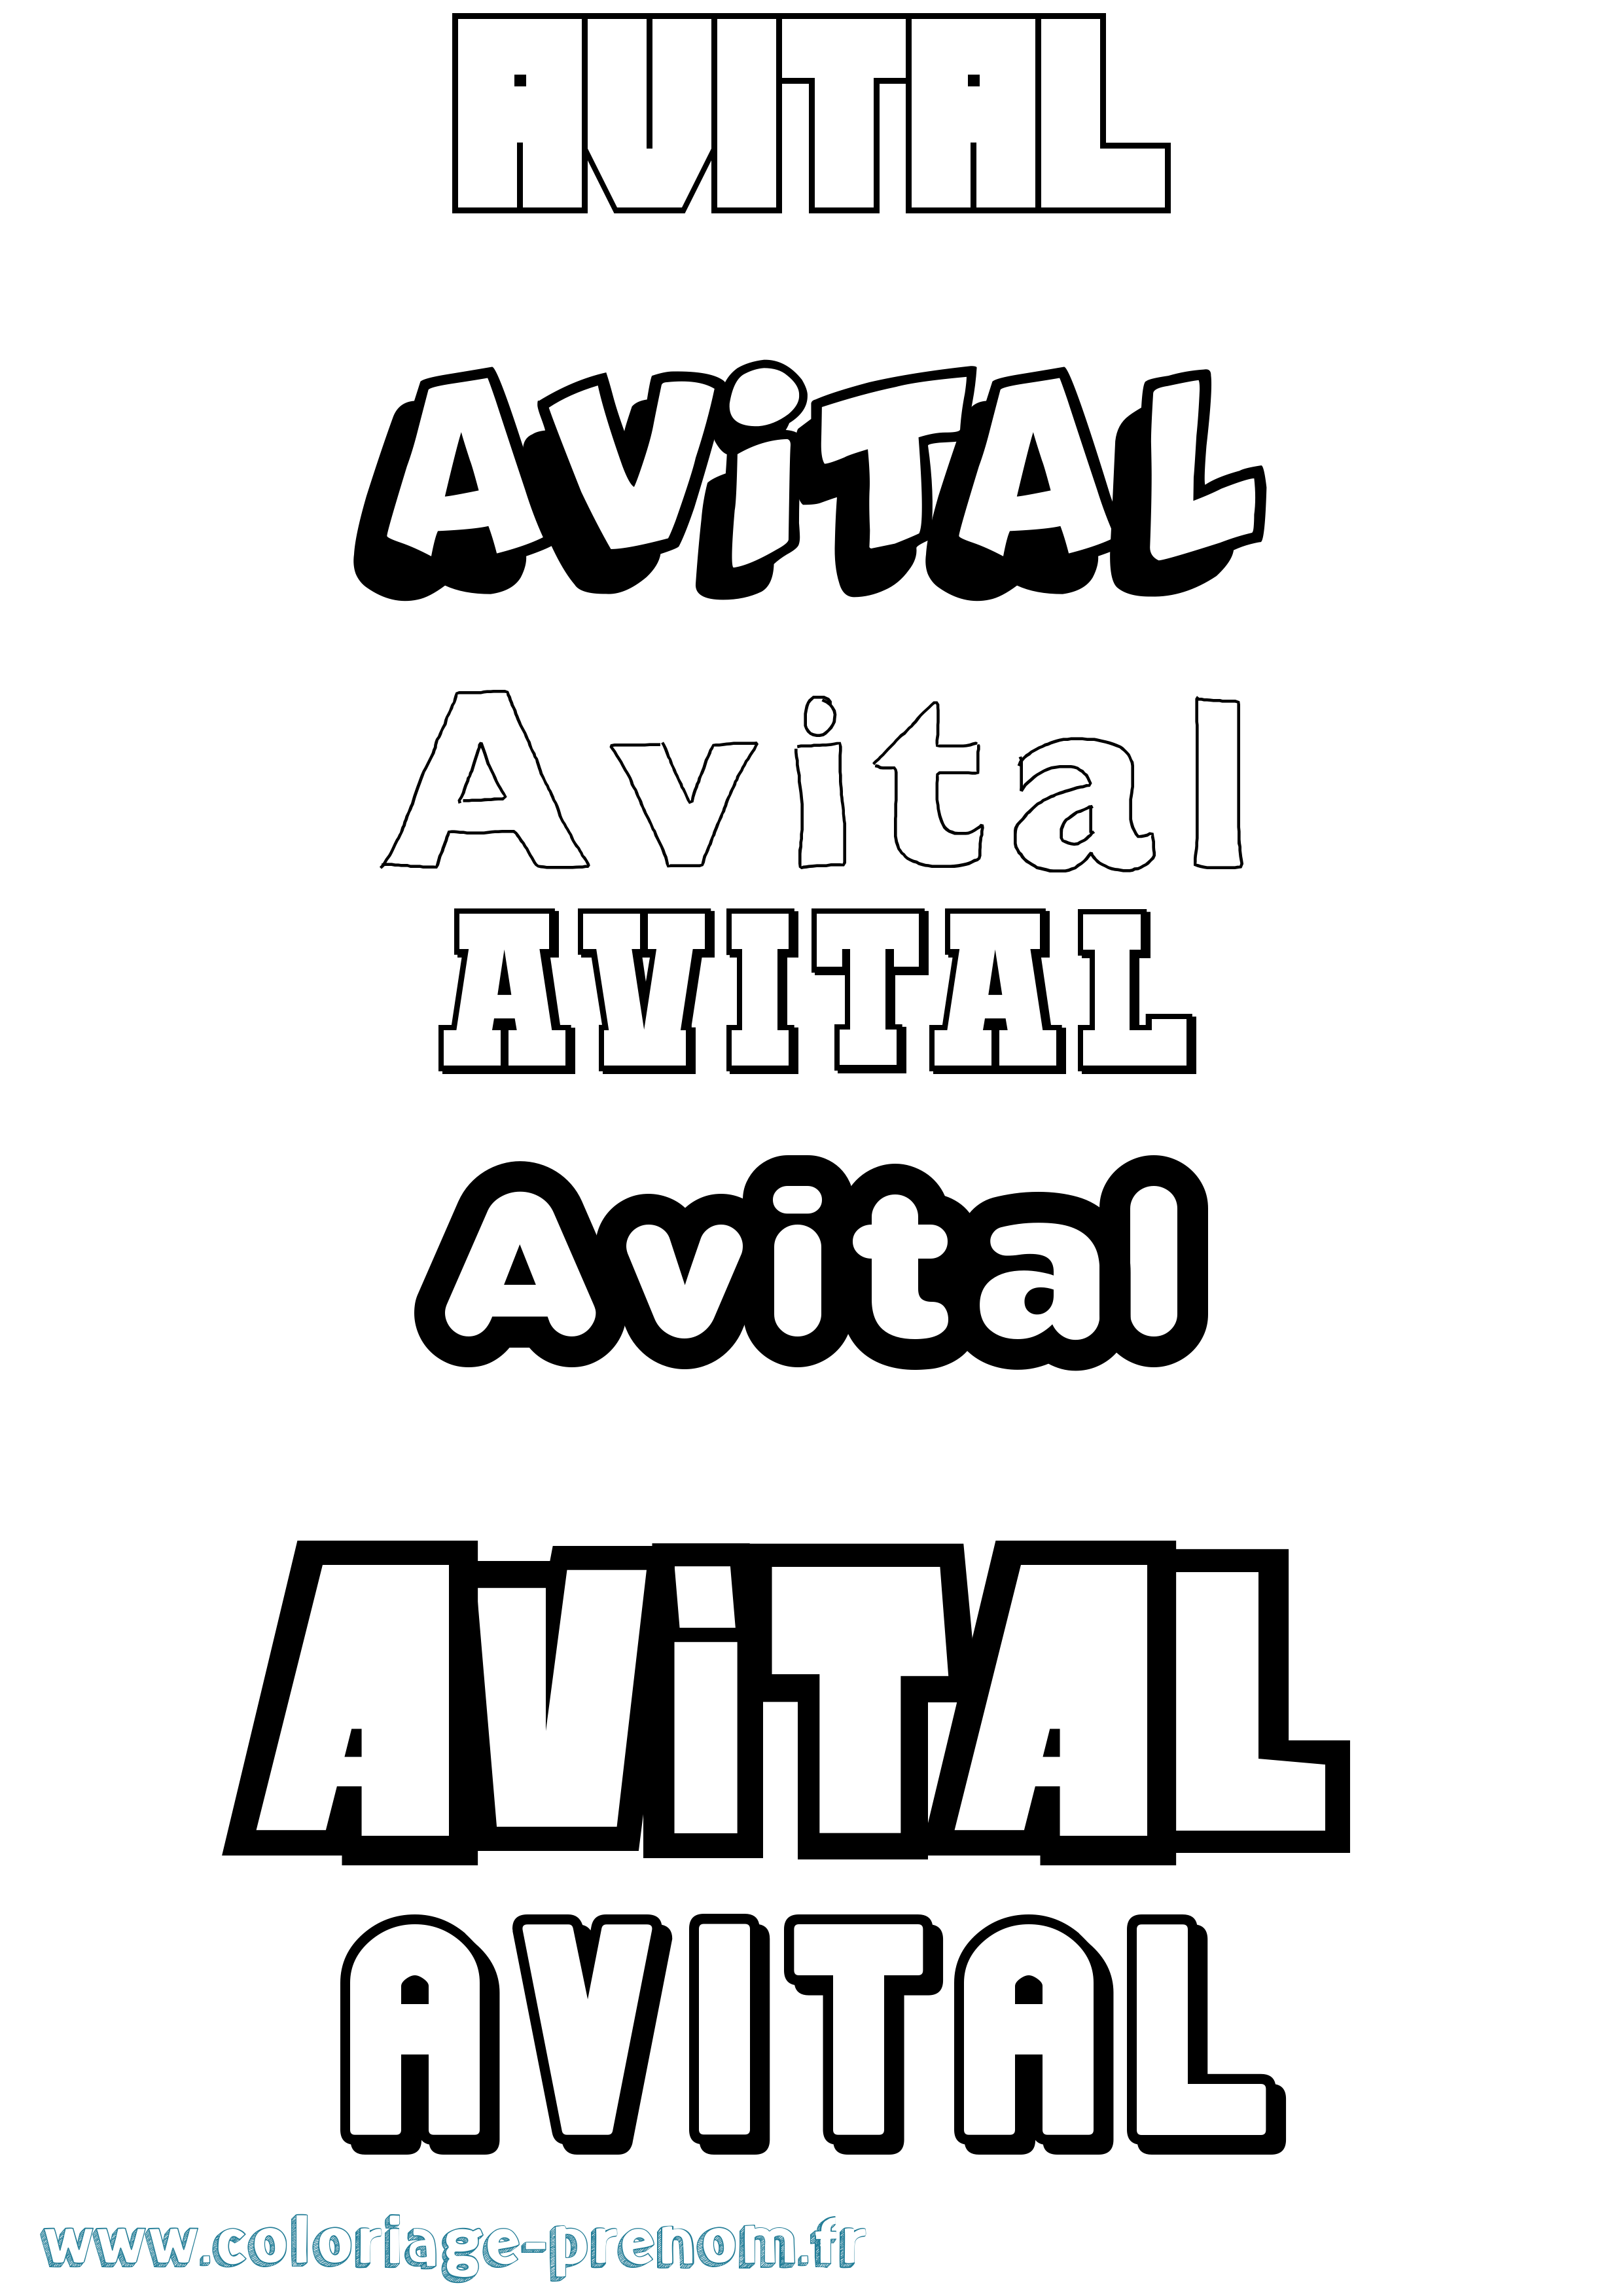 Coloriage prénom Avital